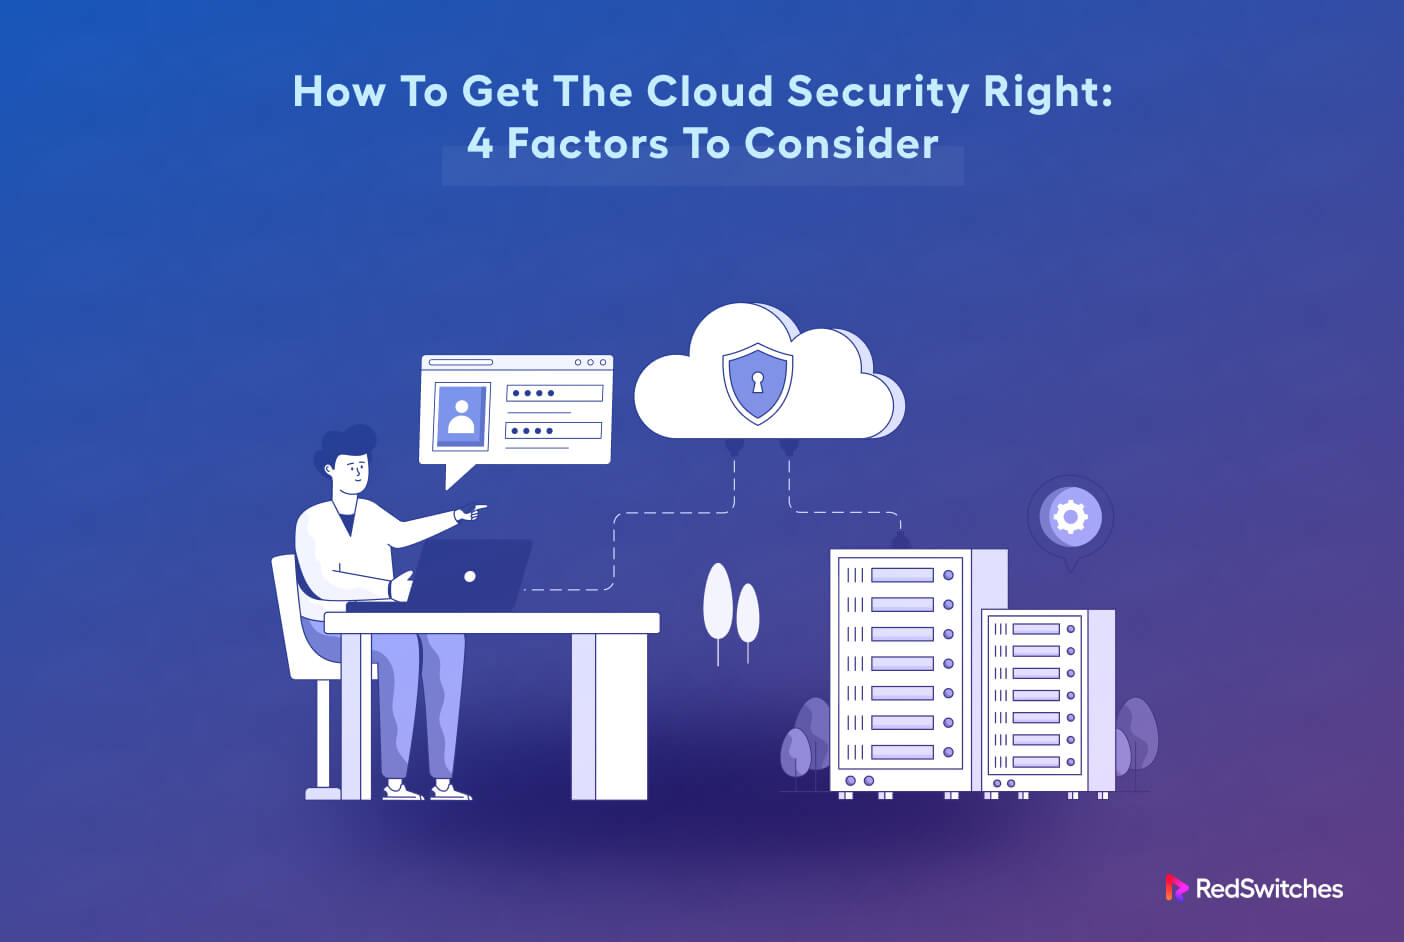 Key factors for cloud security